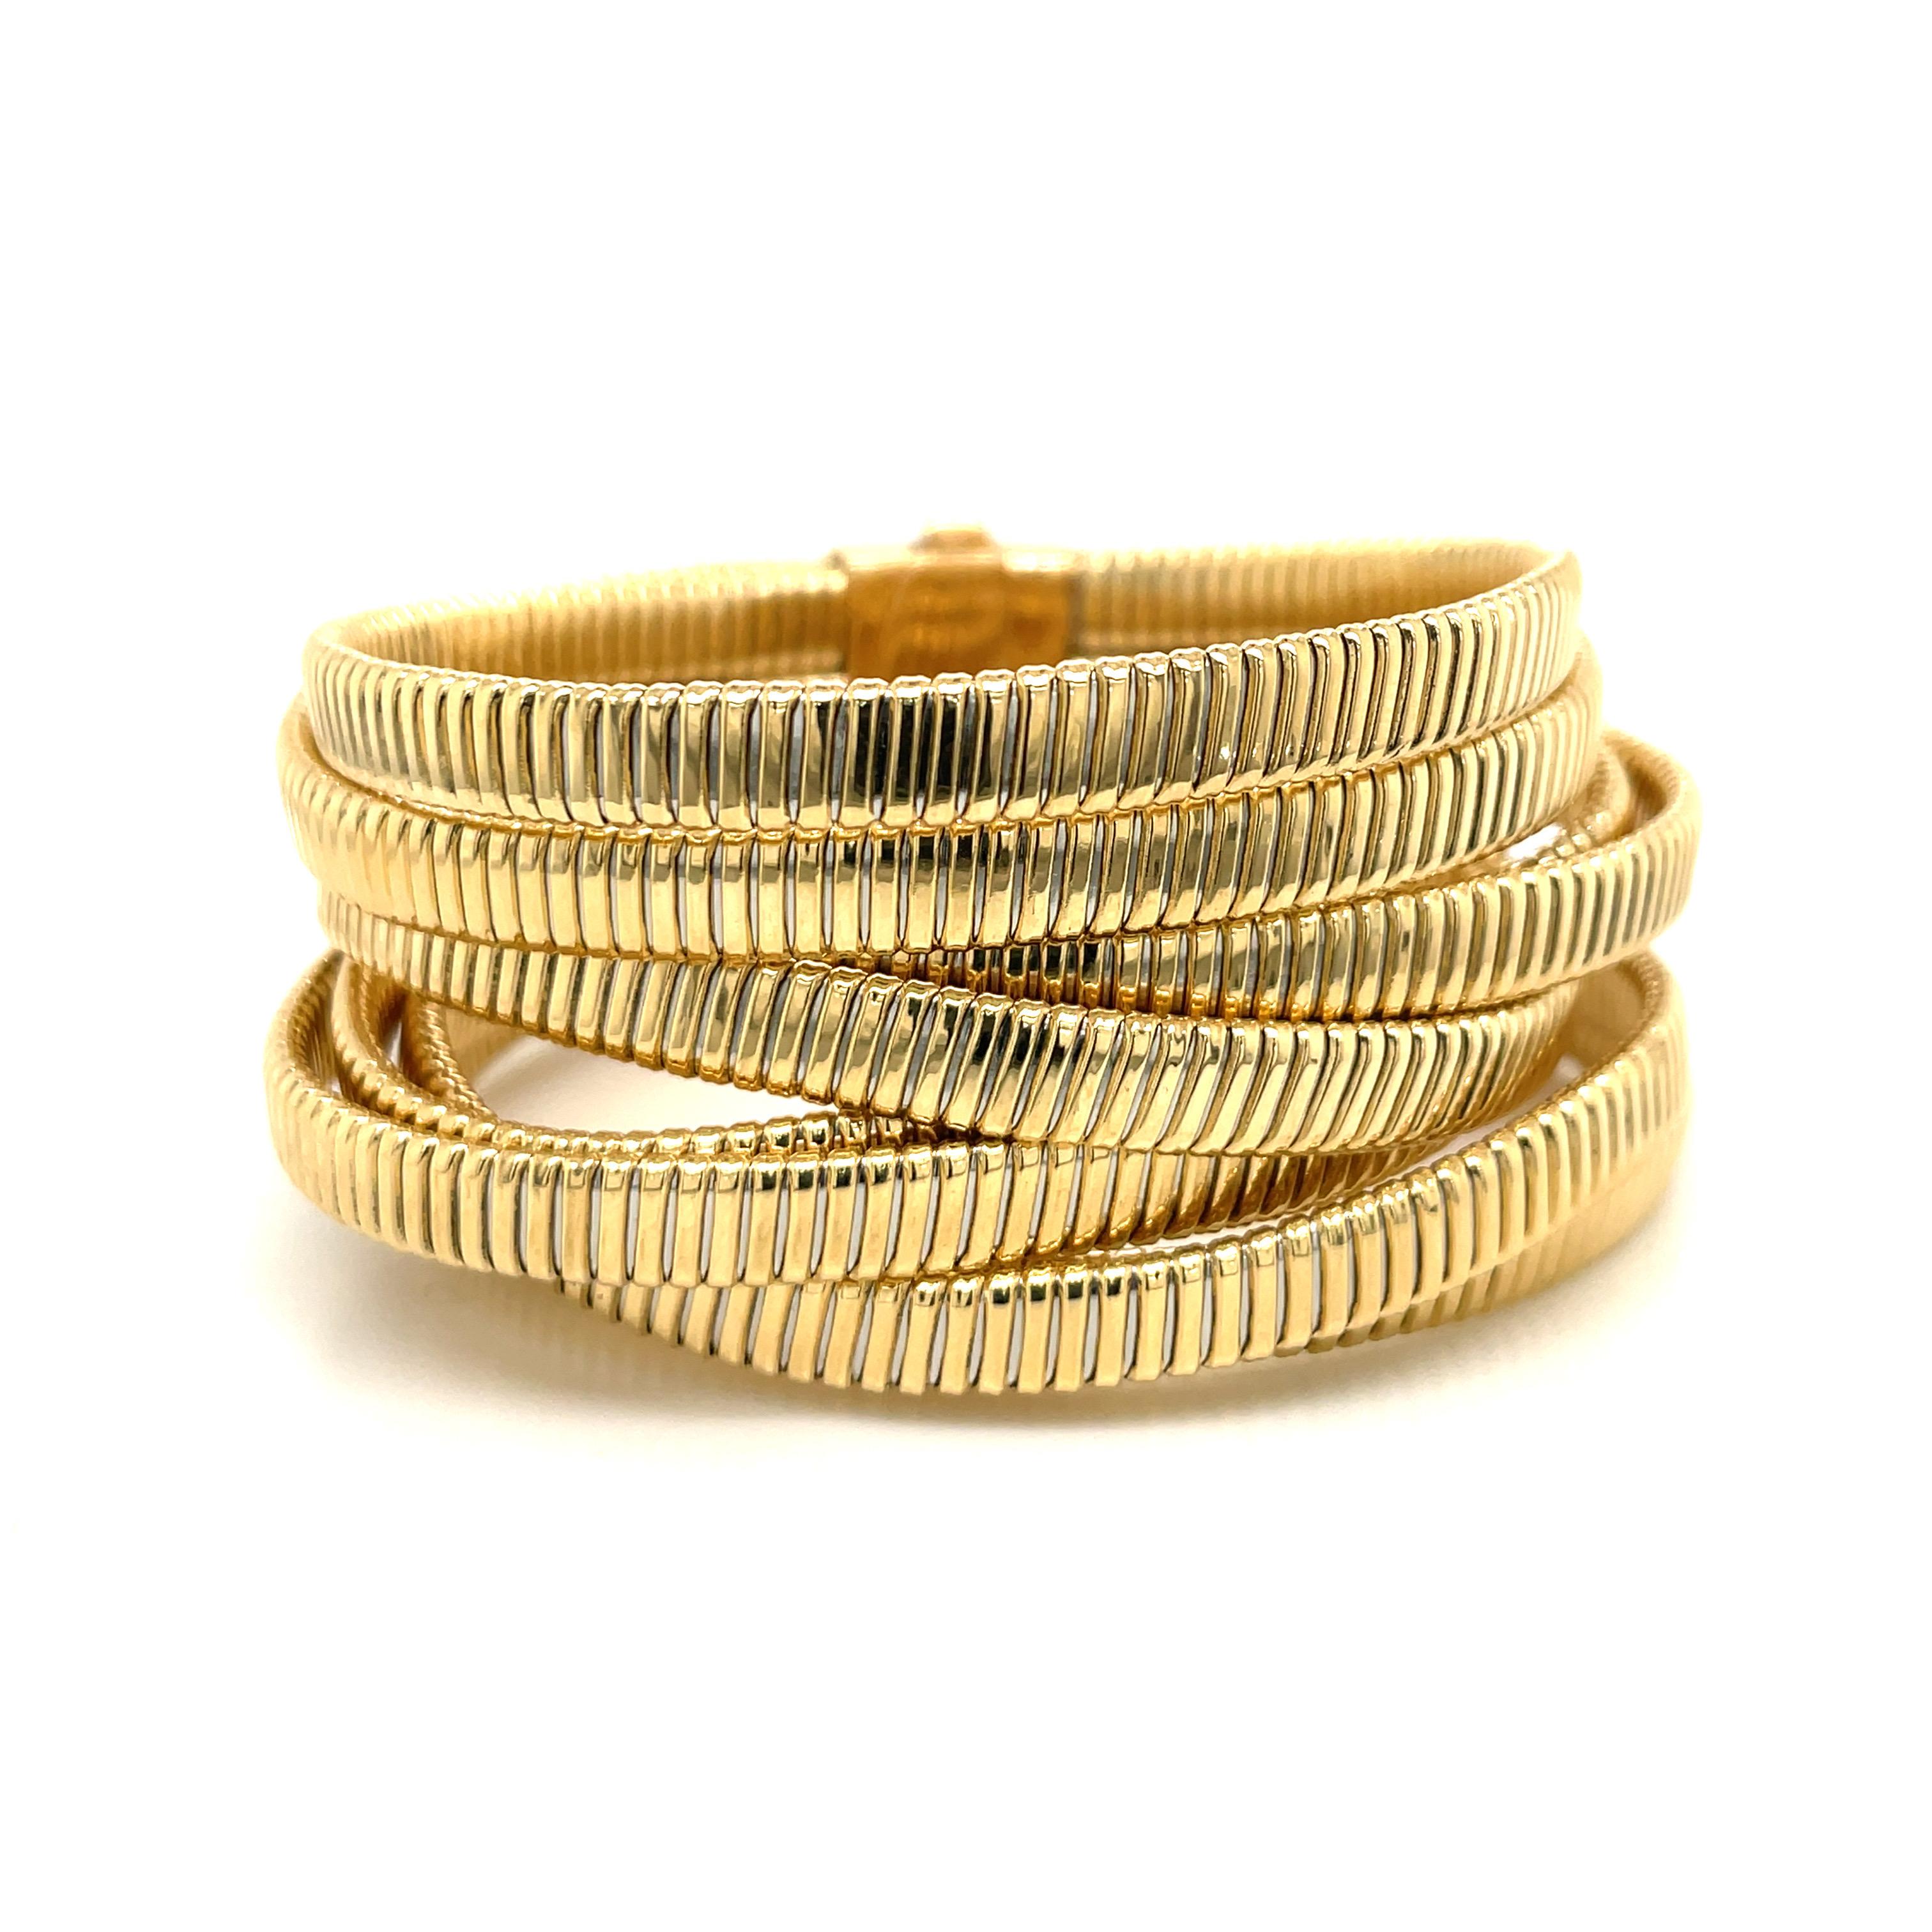 Bracelet large tubogas italien 8 rangées en or jaune 18 carats 66.1 grammes Neuf - En vente à New York, NY